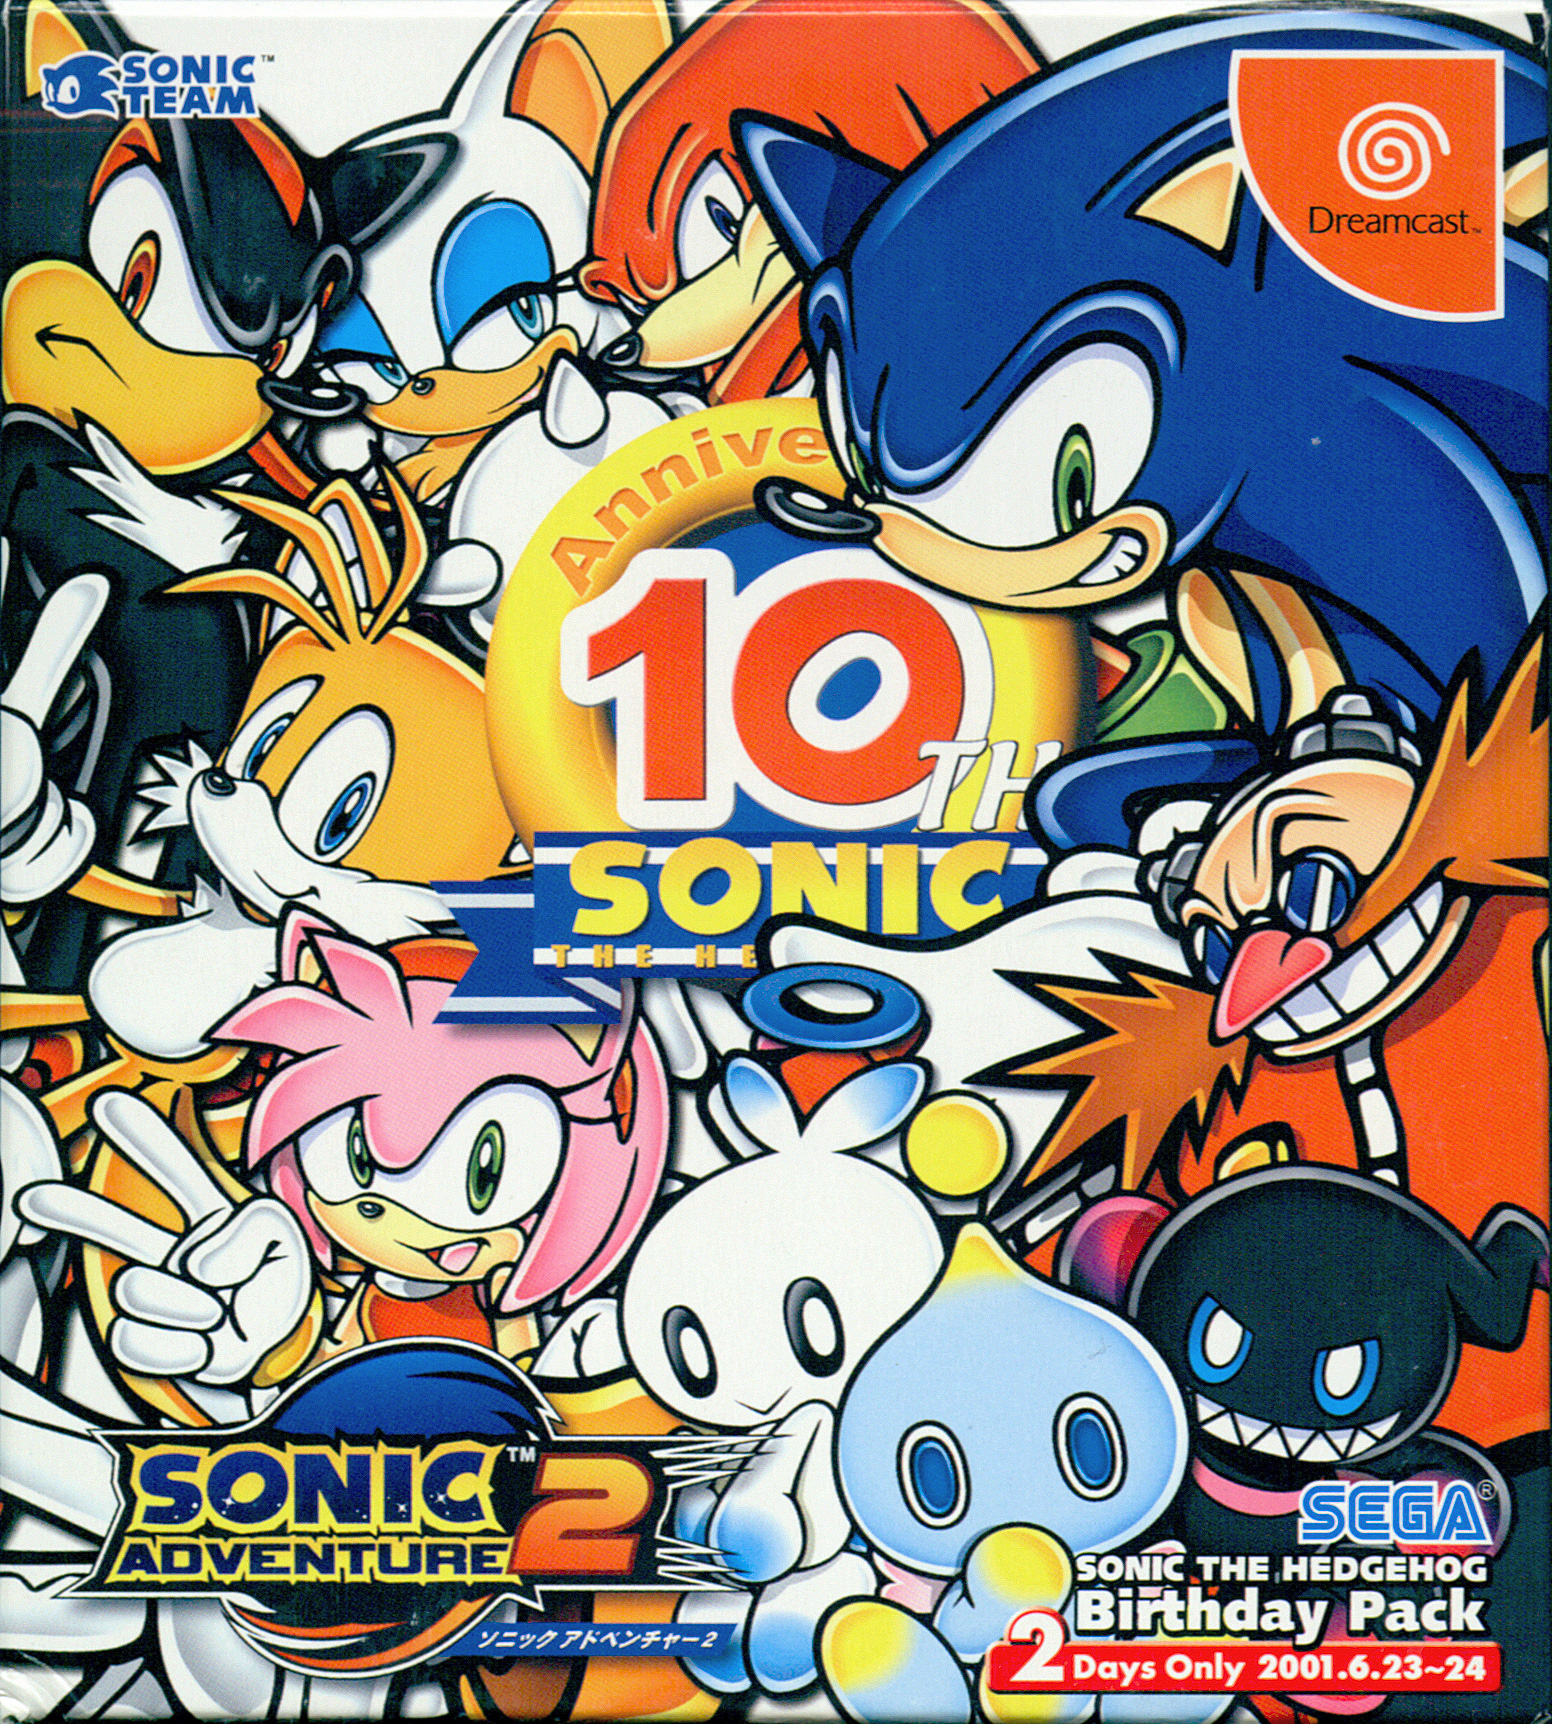 Download Sonic The Hedgehog Birthday Pack Sonic News Network Fandom